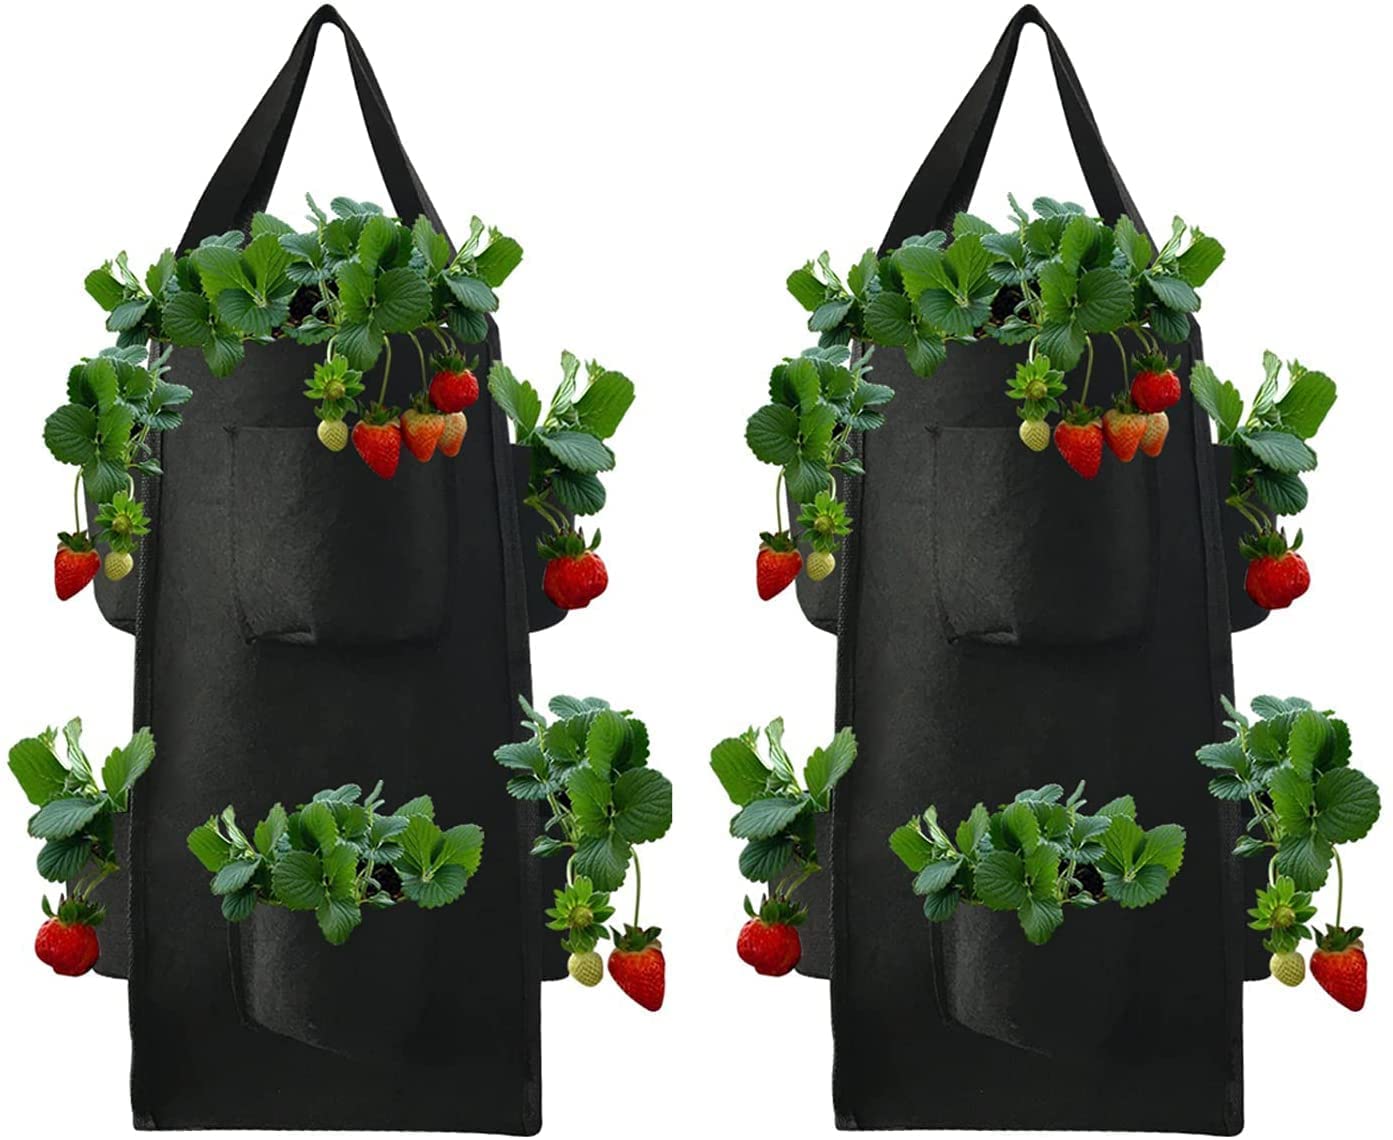 Strawberry grow bag